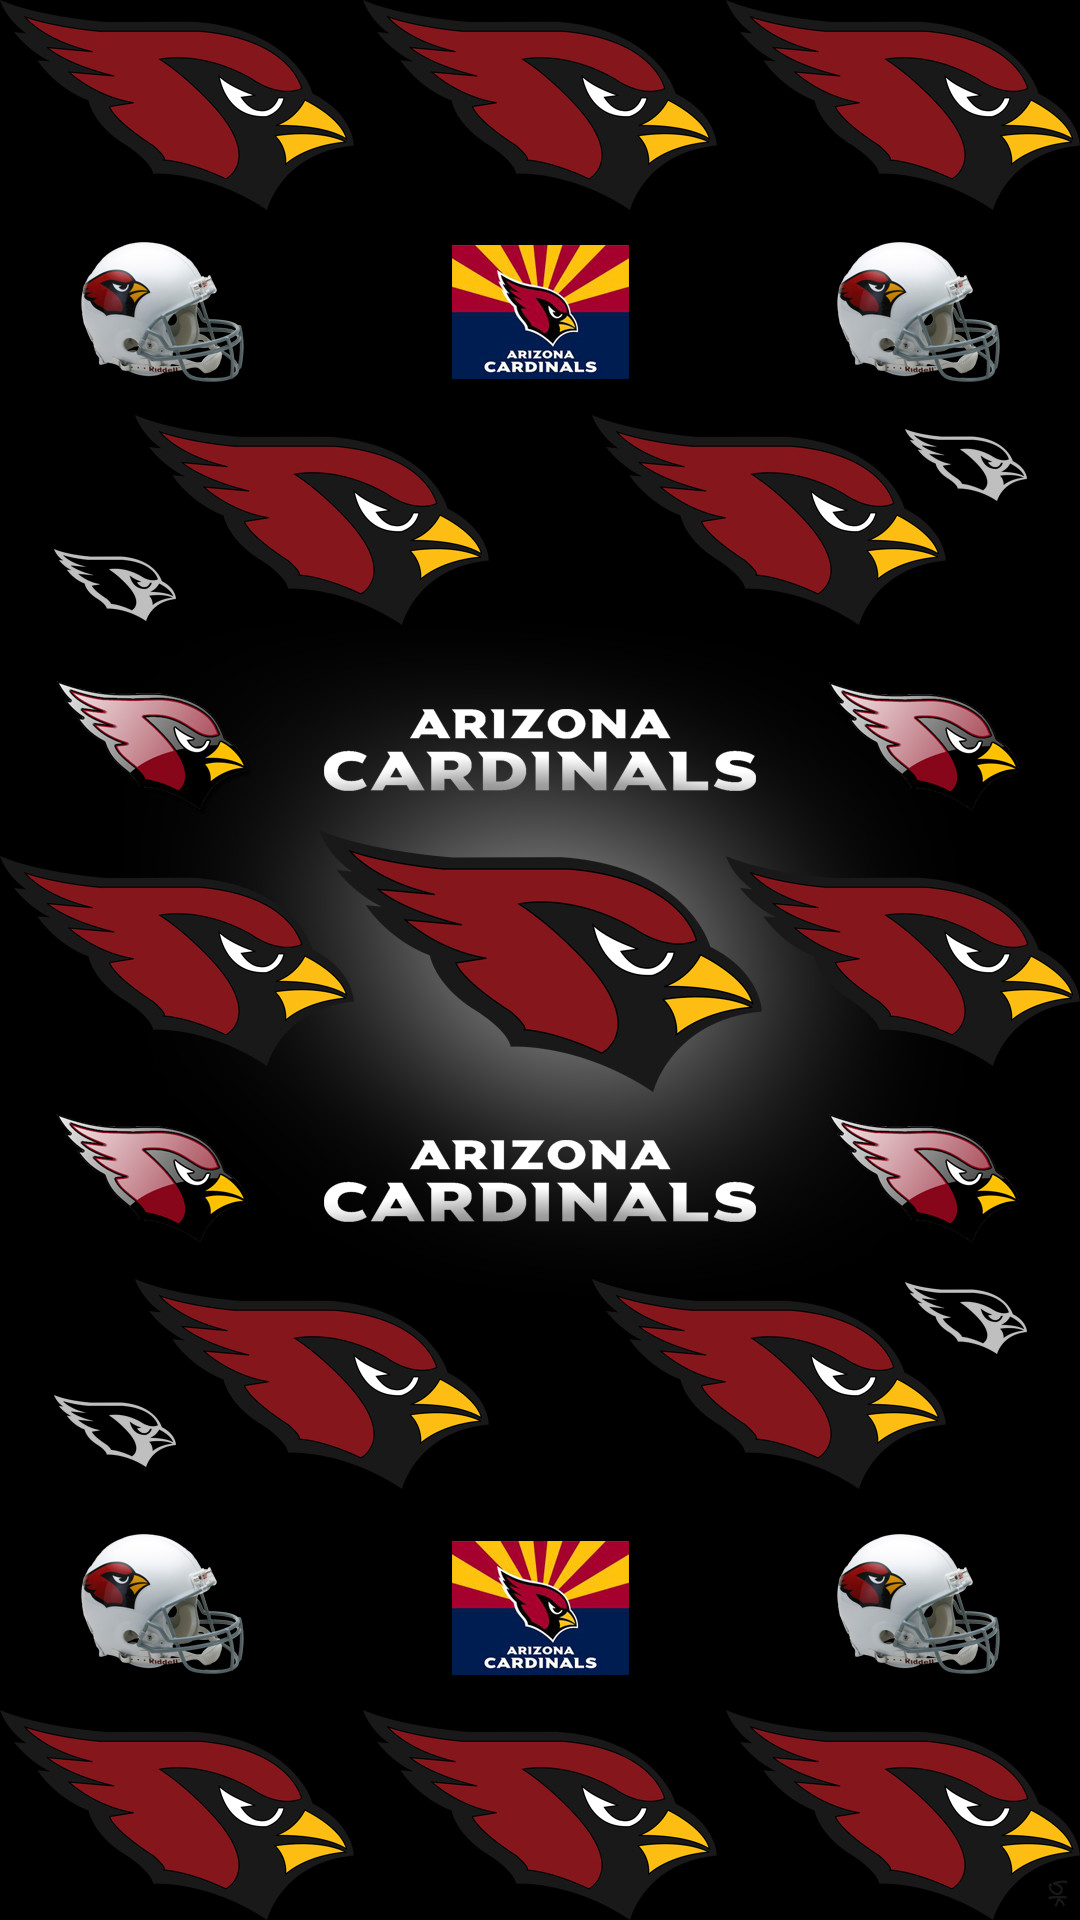 Arizona Cardinals Wallpaper The Best Image In